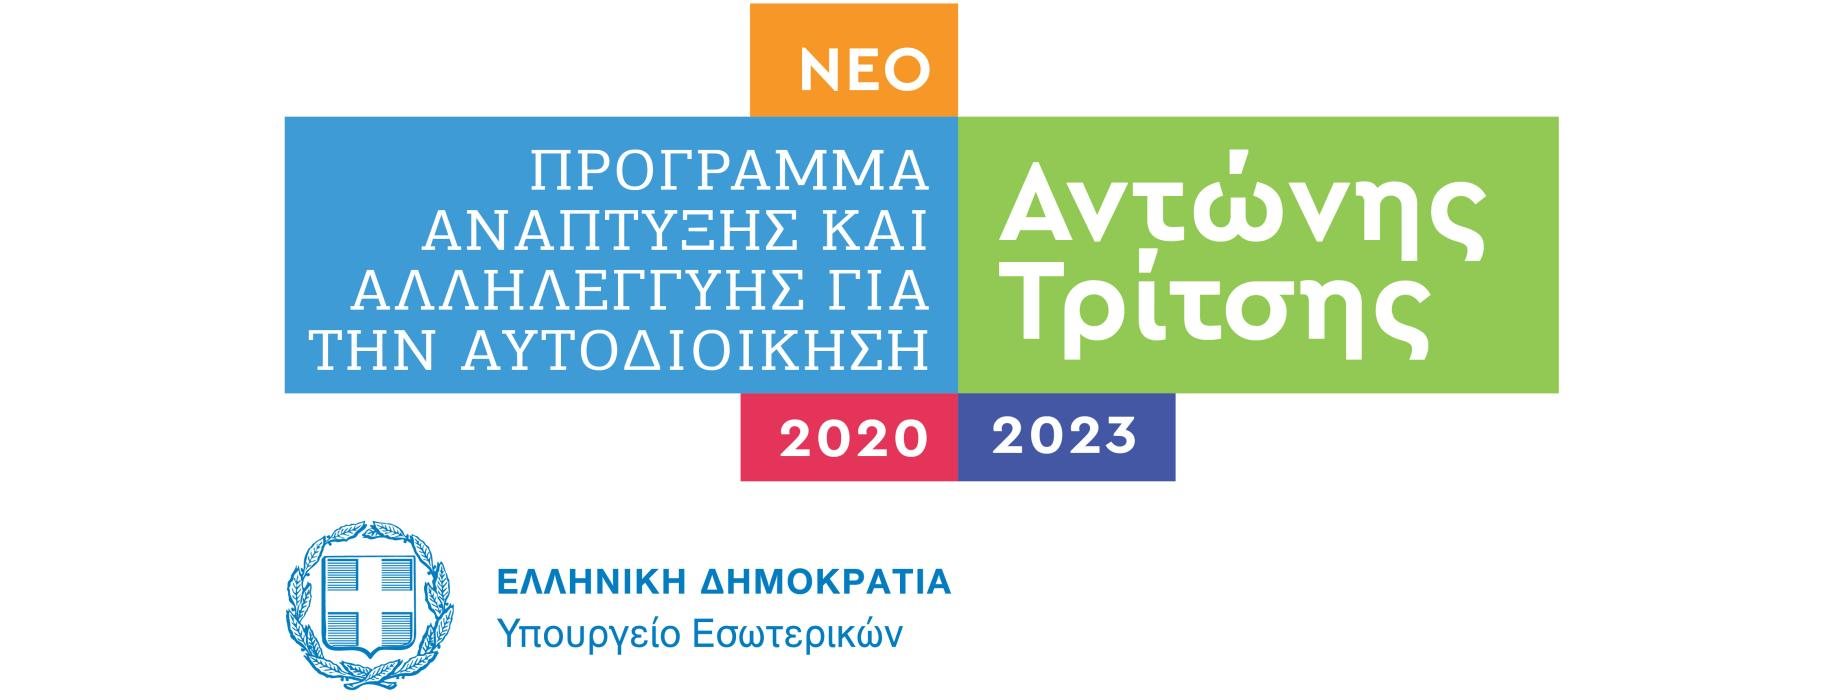 More information about "Εκ νέου παράταση σε προσκλήσεις από το Πρόγραμμα “Αντώνης Τρίτσης""